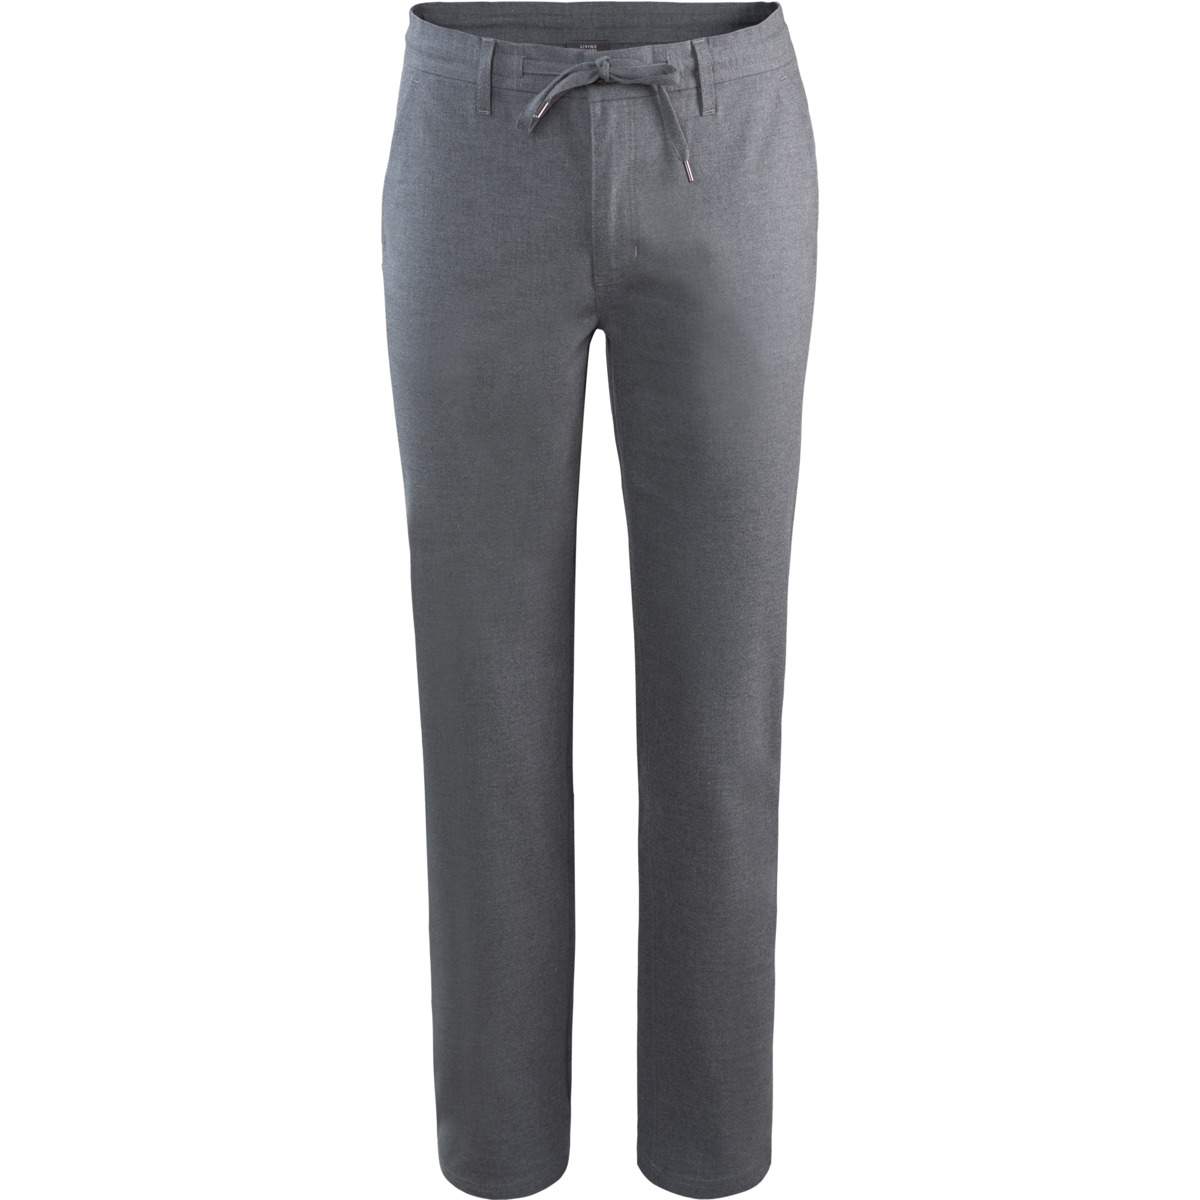 Grey Trousers, NILS